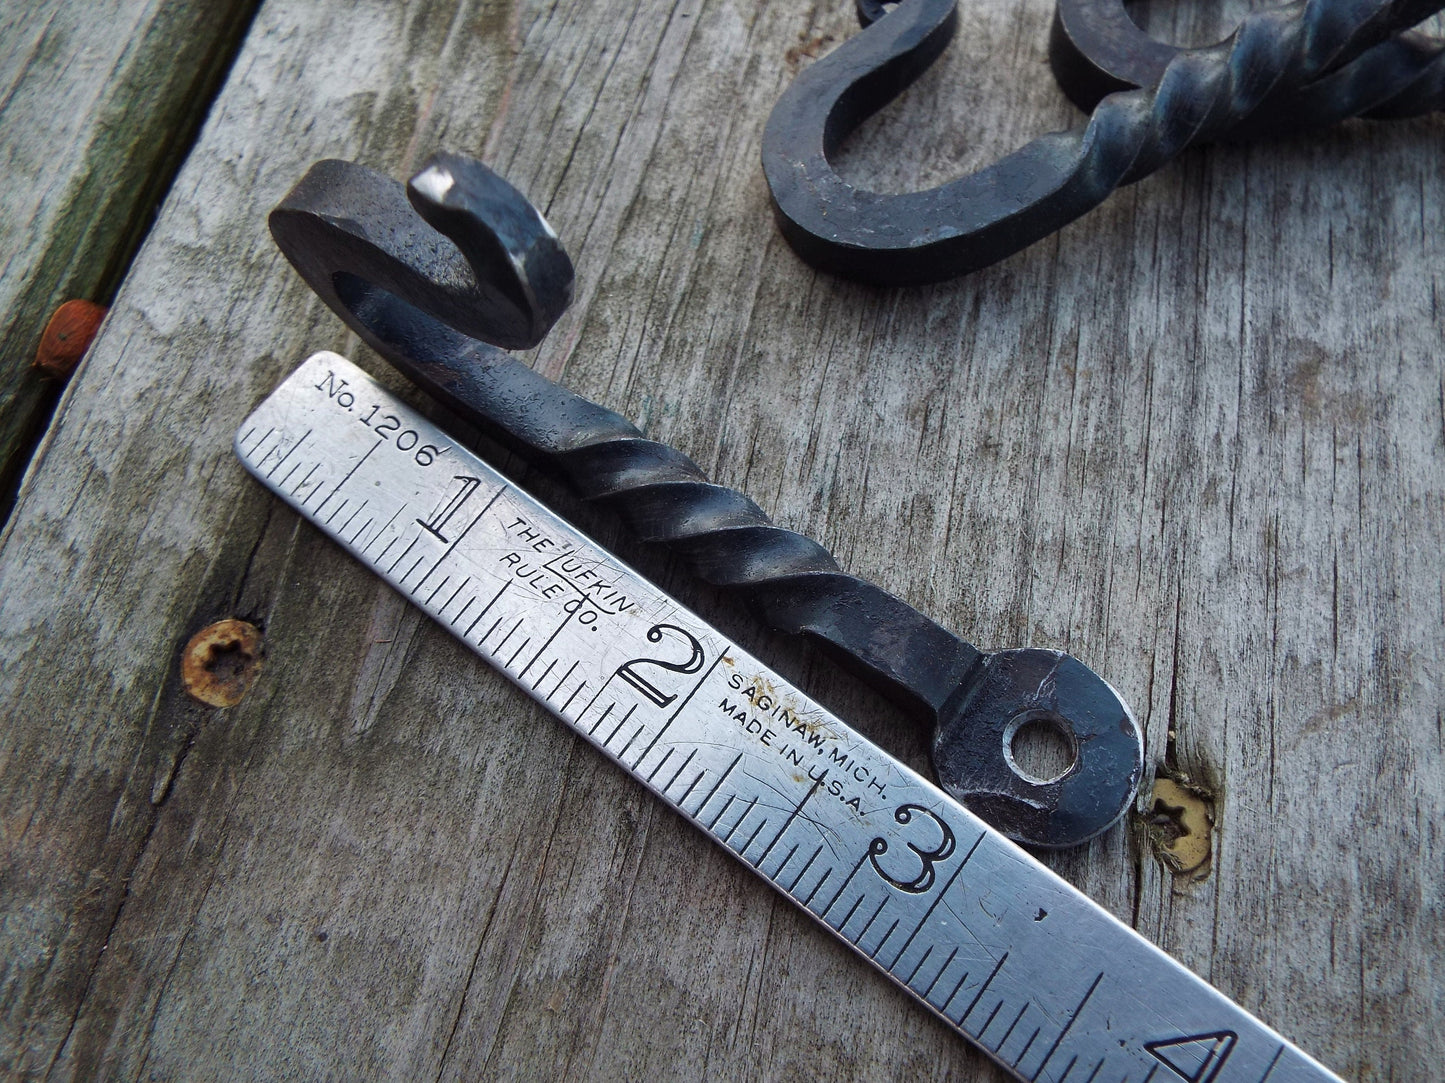 Small Twisted Blacksmith Hook